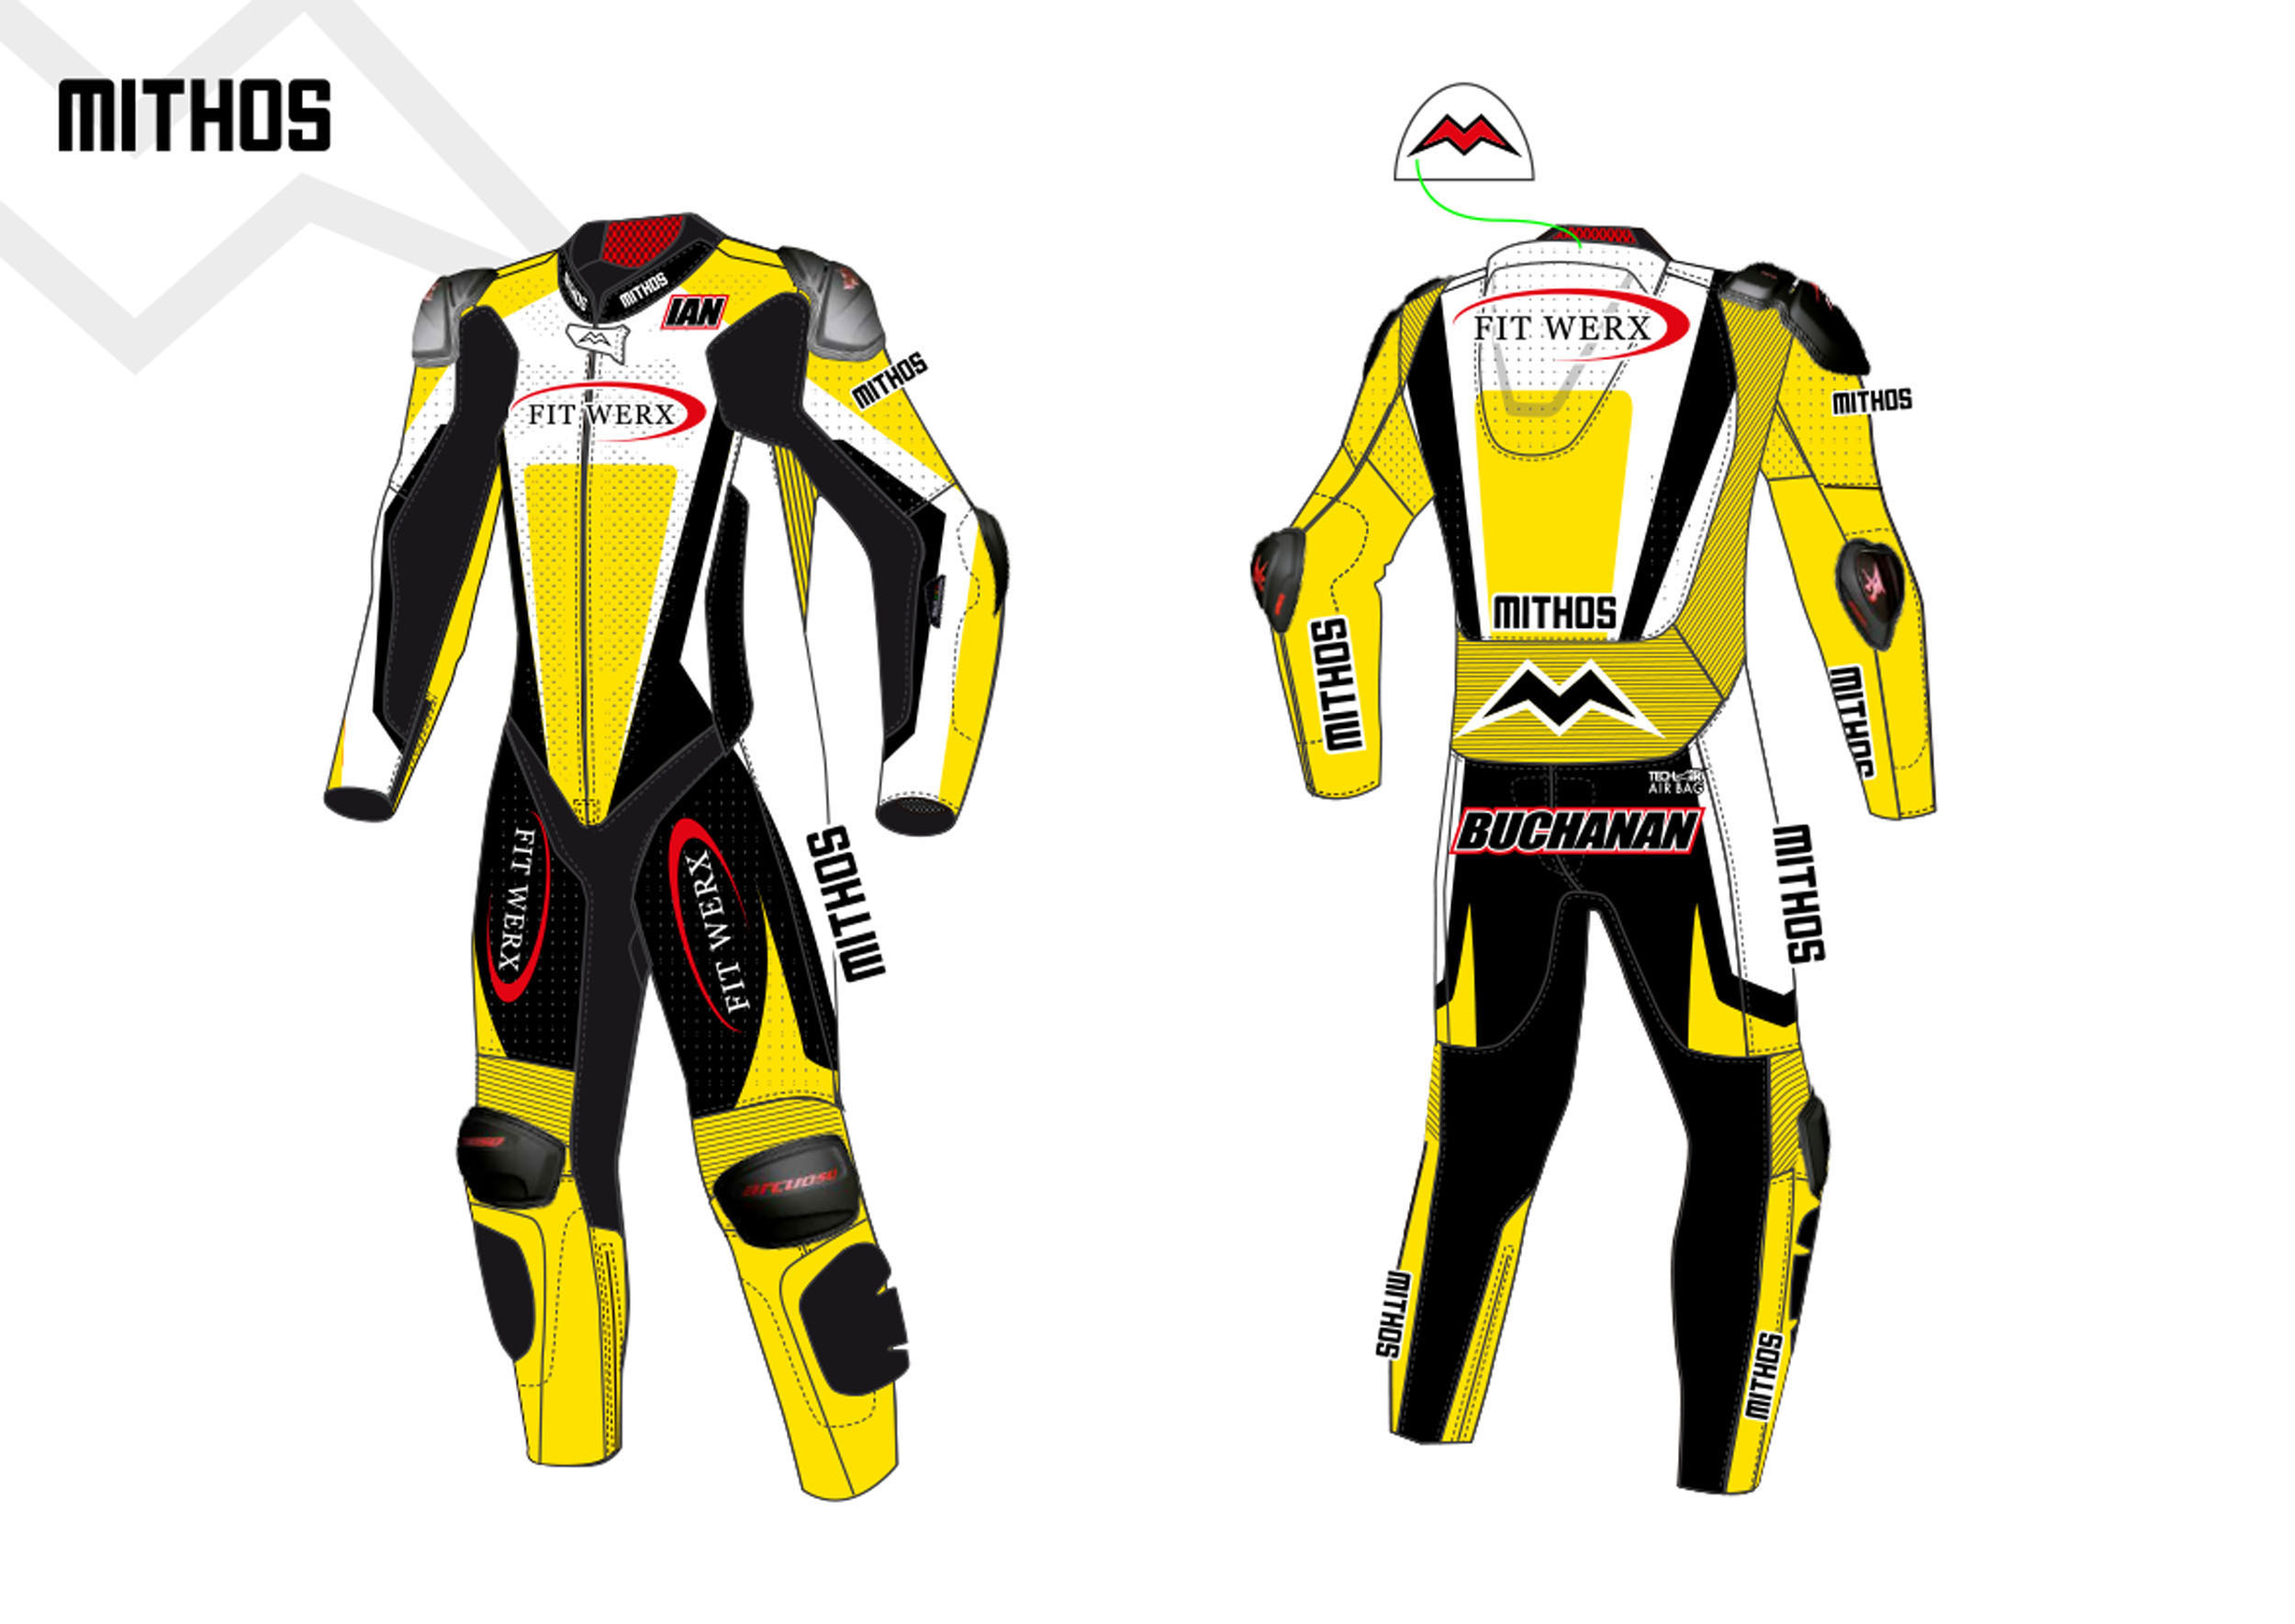 Mithos - Kangaroo Leather Suit - Racing Fit Design